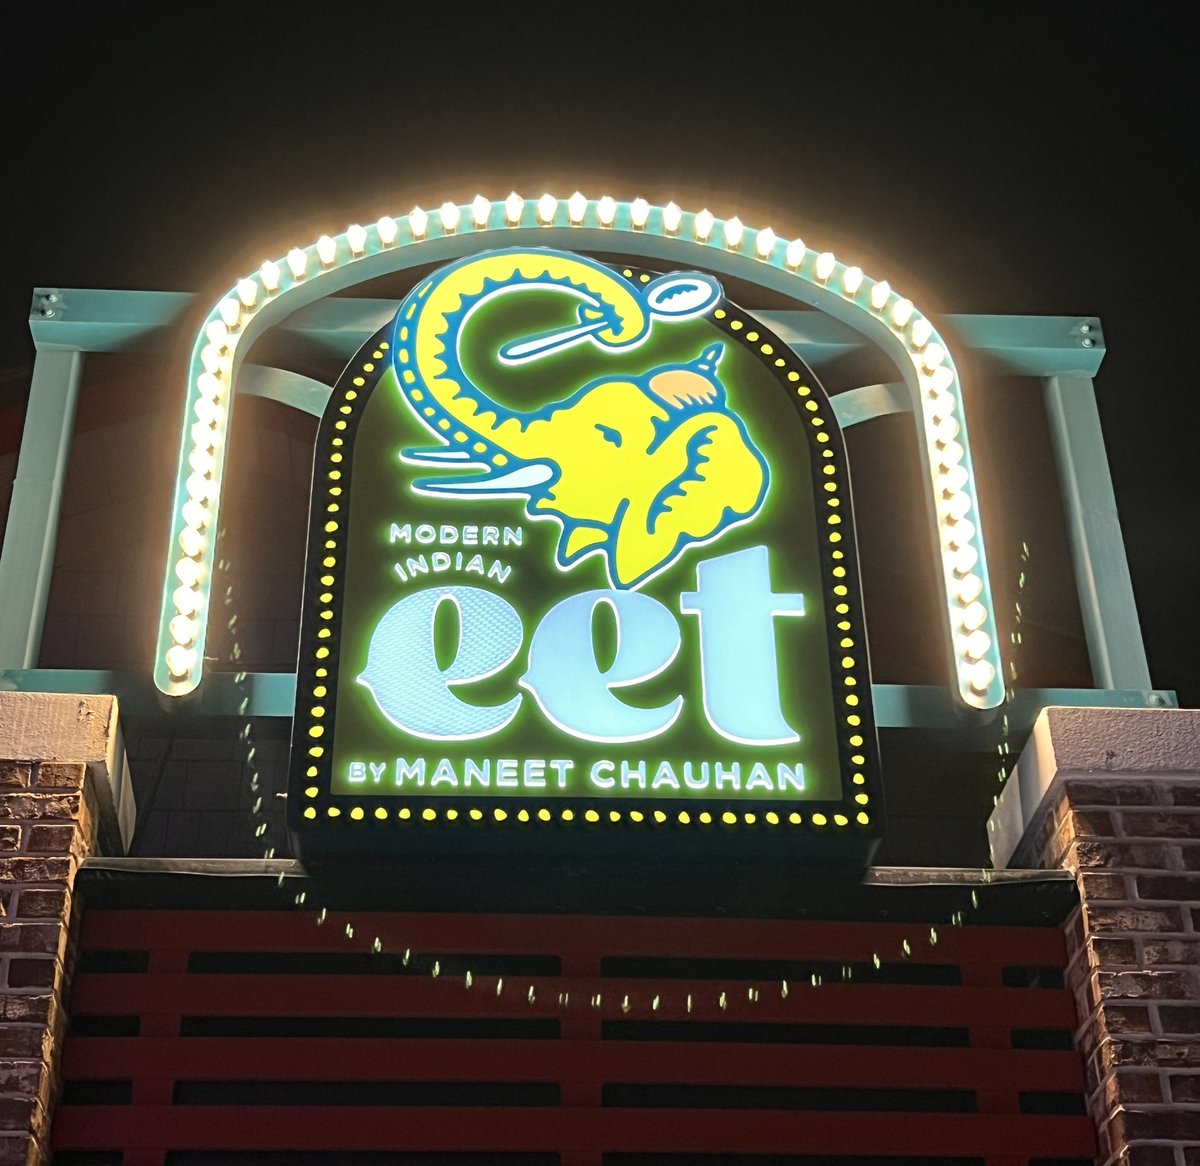 Looking forward to tomorrow’s opening of “eet” by @ManeetChauhan at Disney Springs #yum